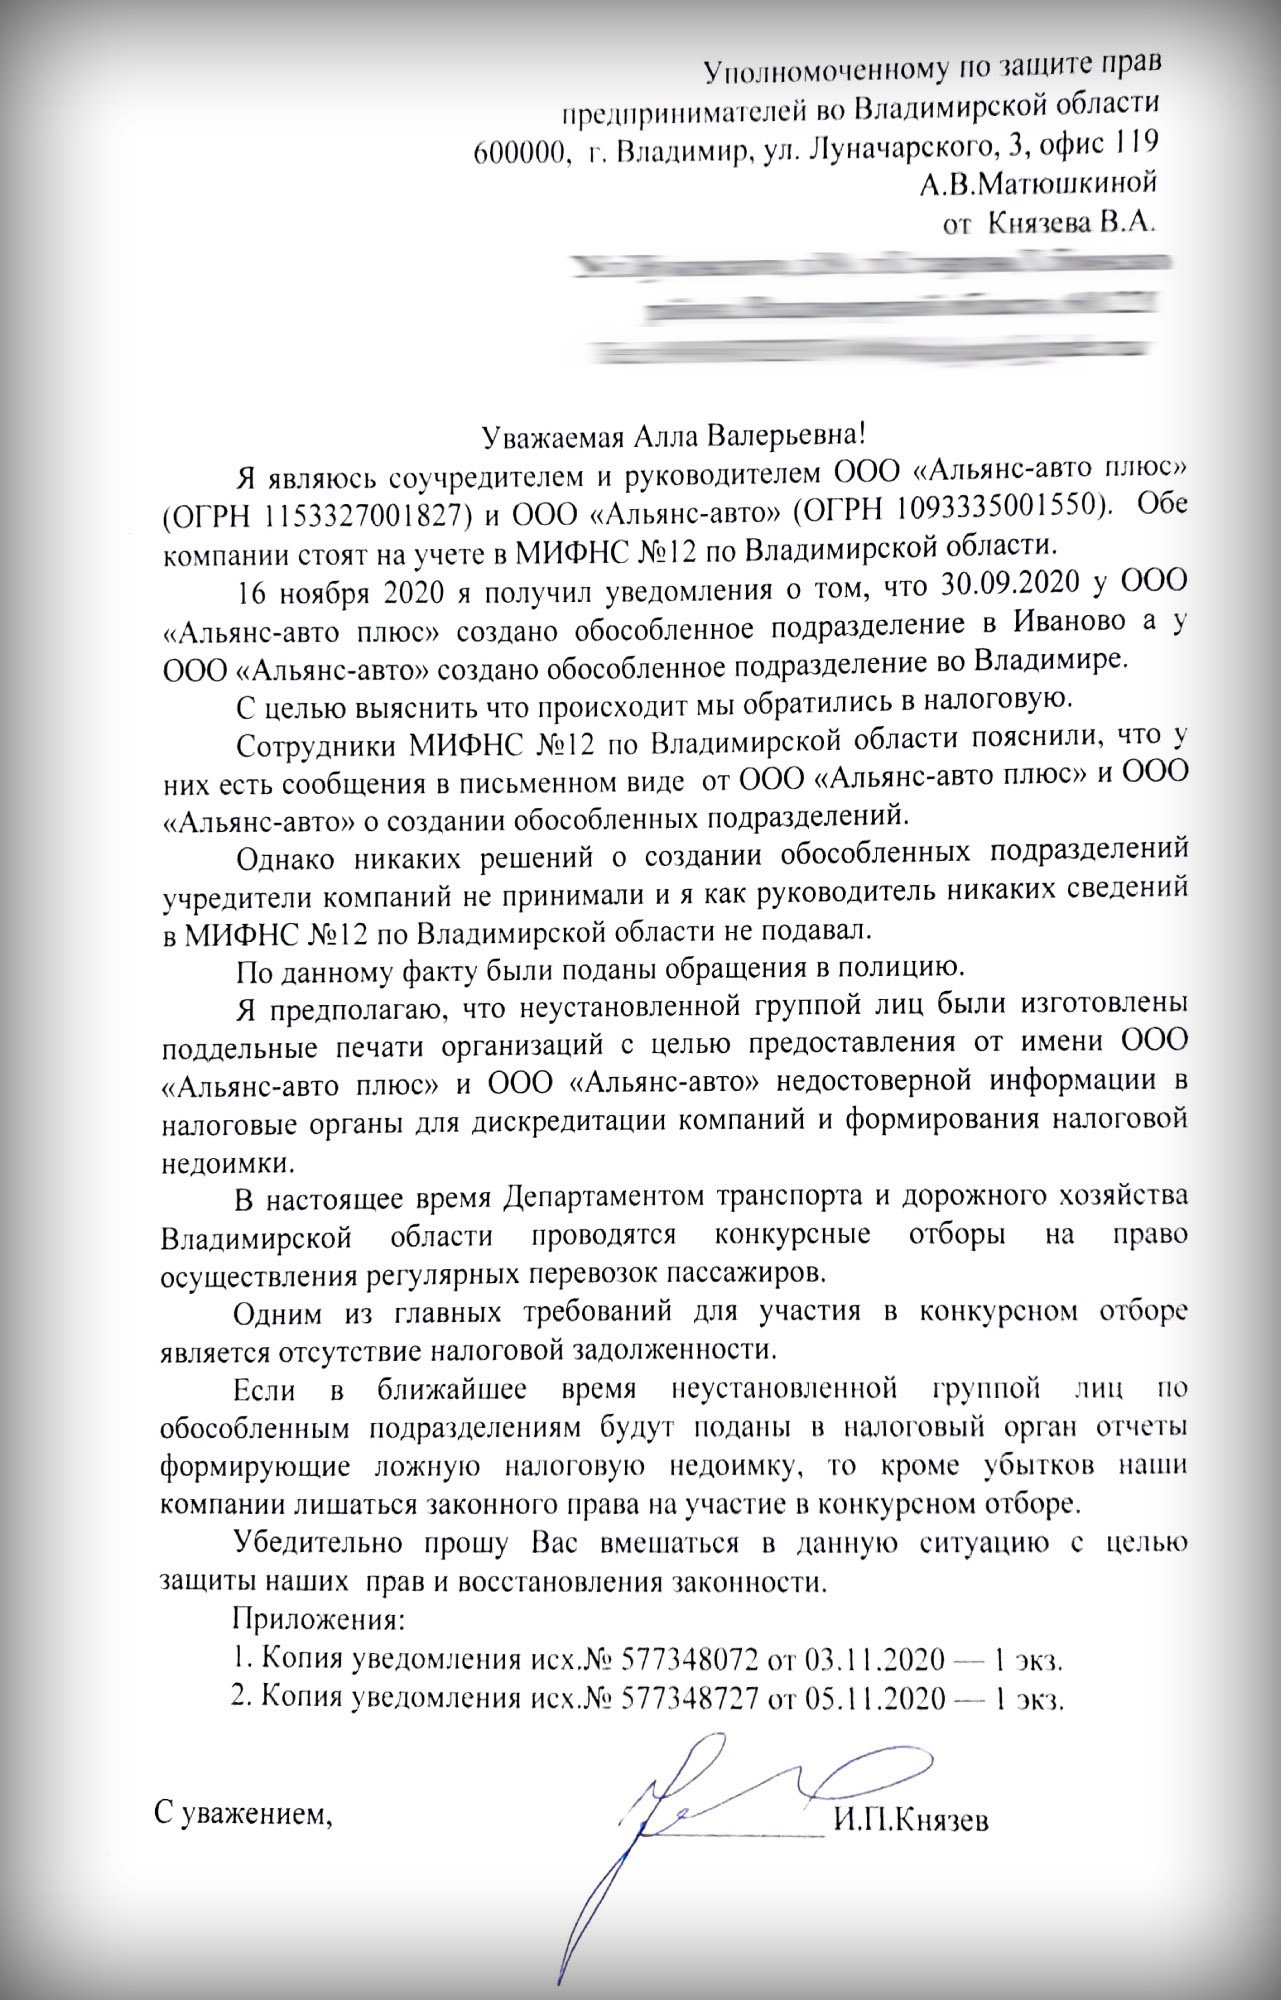 Letter_Knyazev+.jpg